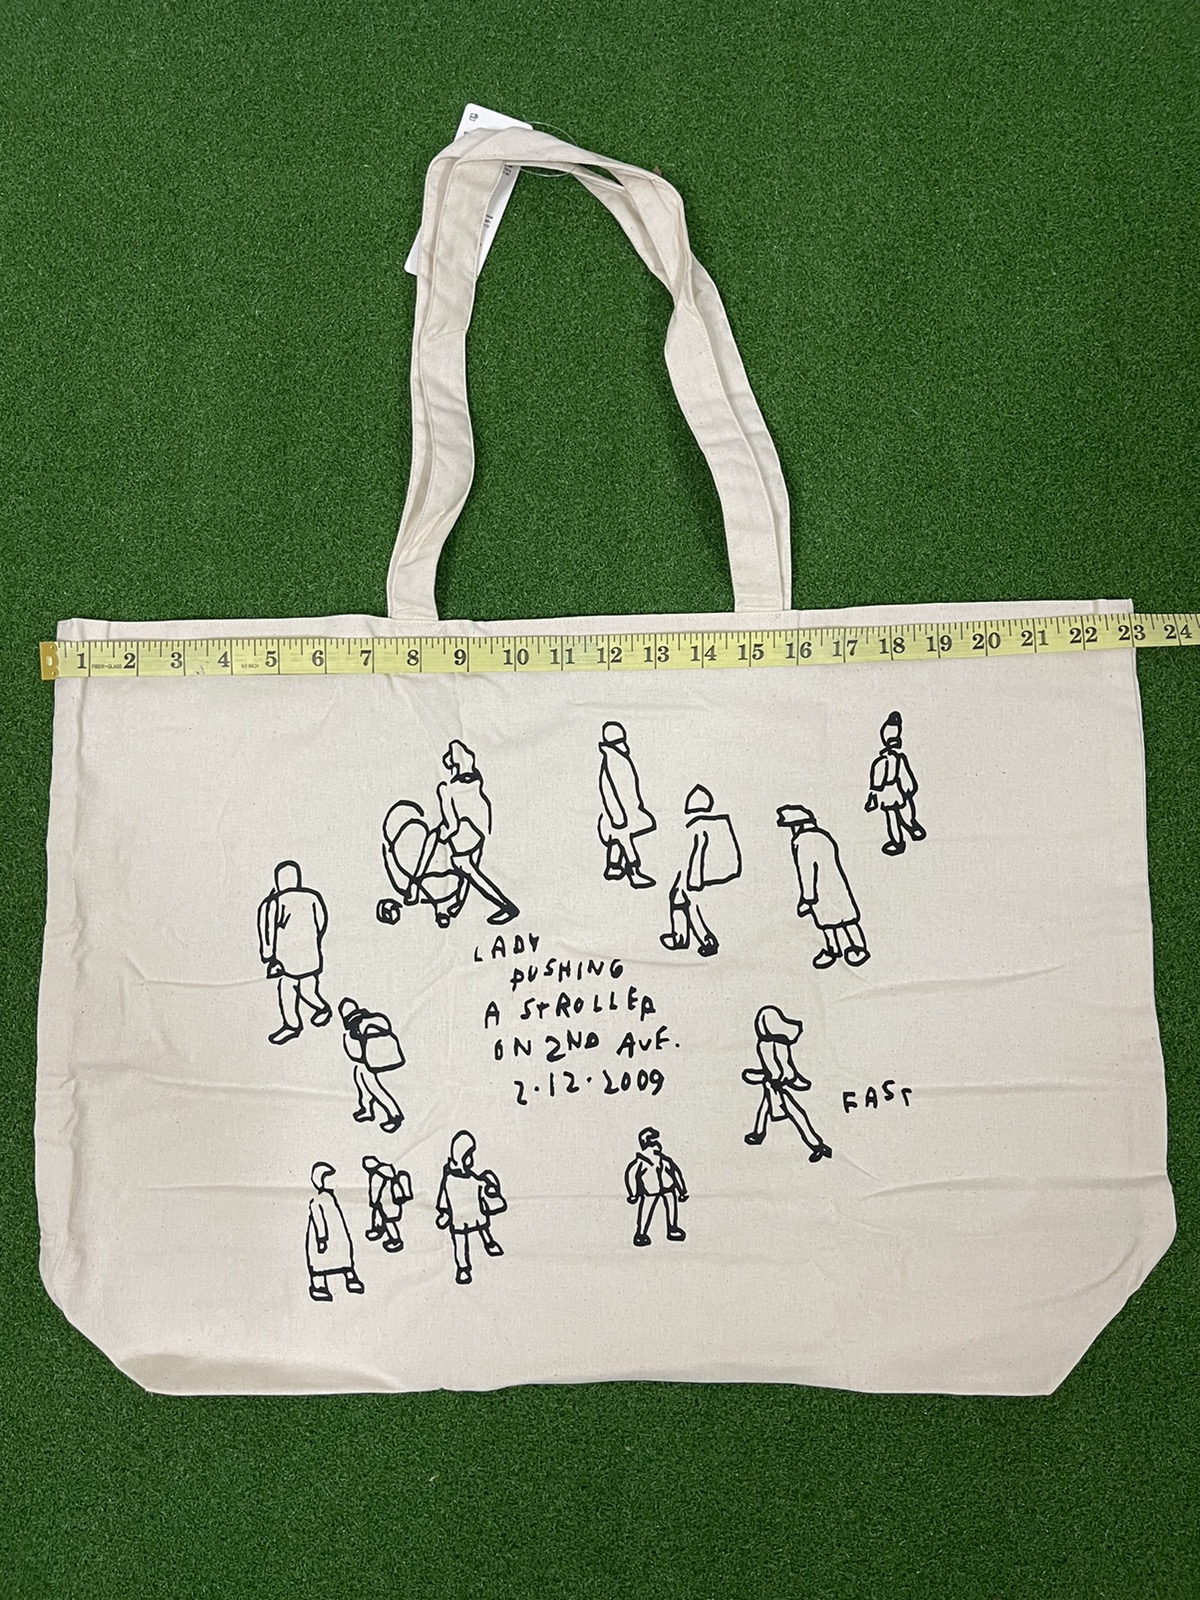 Jun Takahashi - New Jason Polan Tote Bag Limited Edition / Uniqlo / Eva - 8